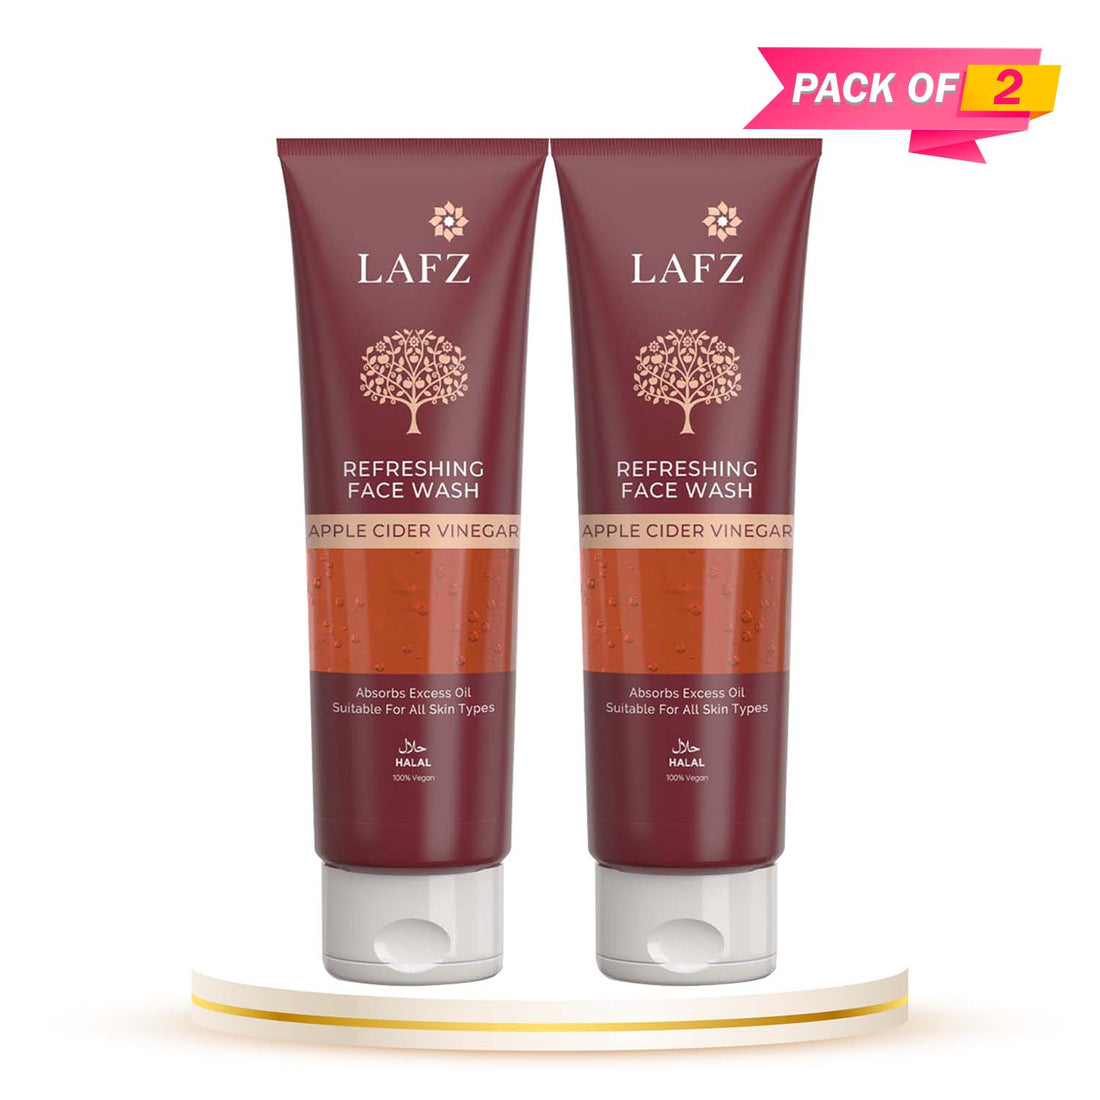 Lafz Apple Cider Vinegar Face Wash (75ml) - Tube (Pack of 2)